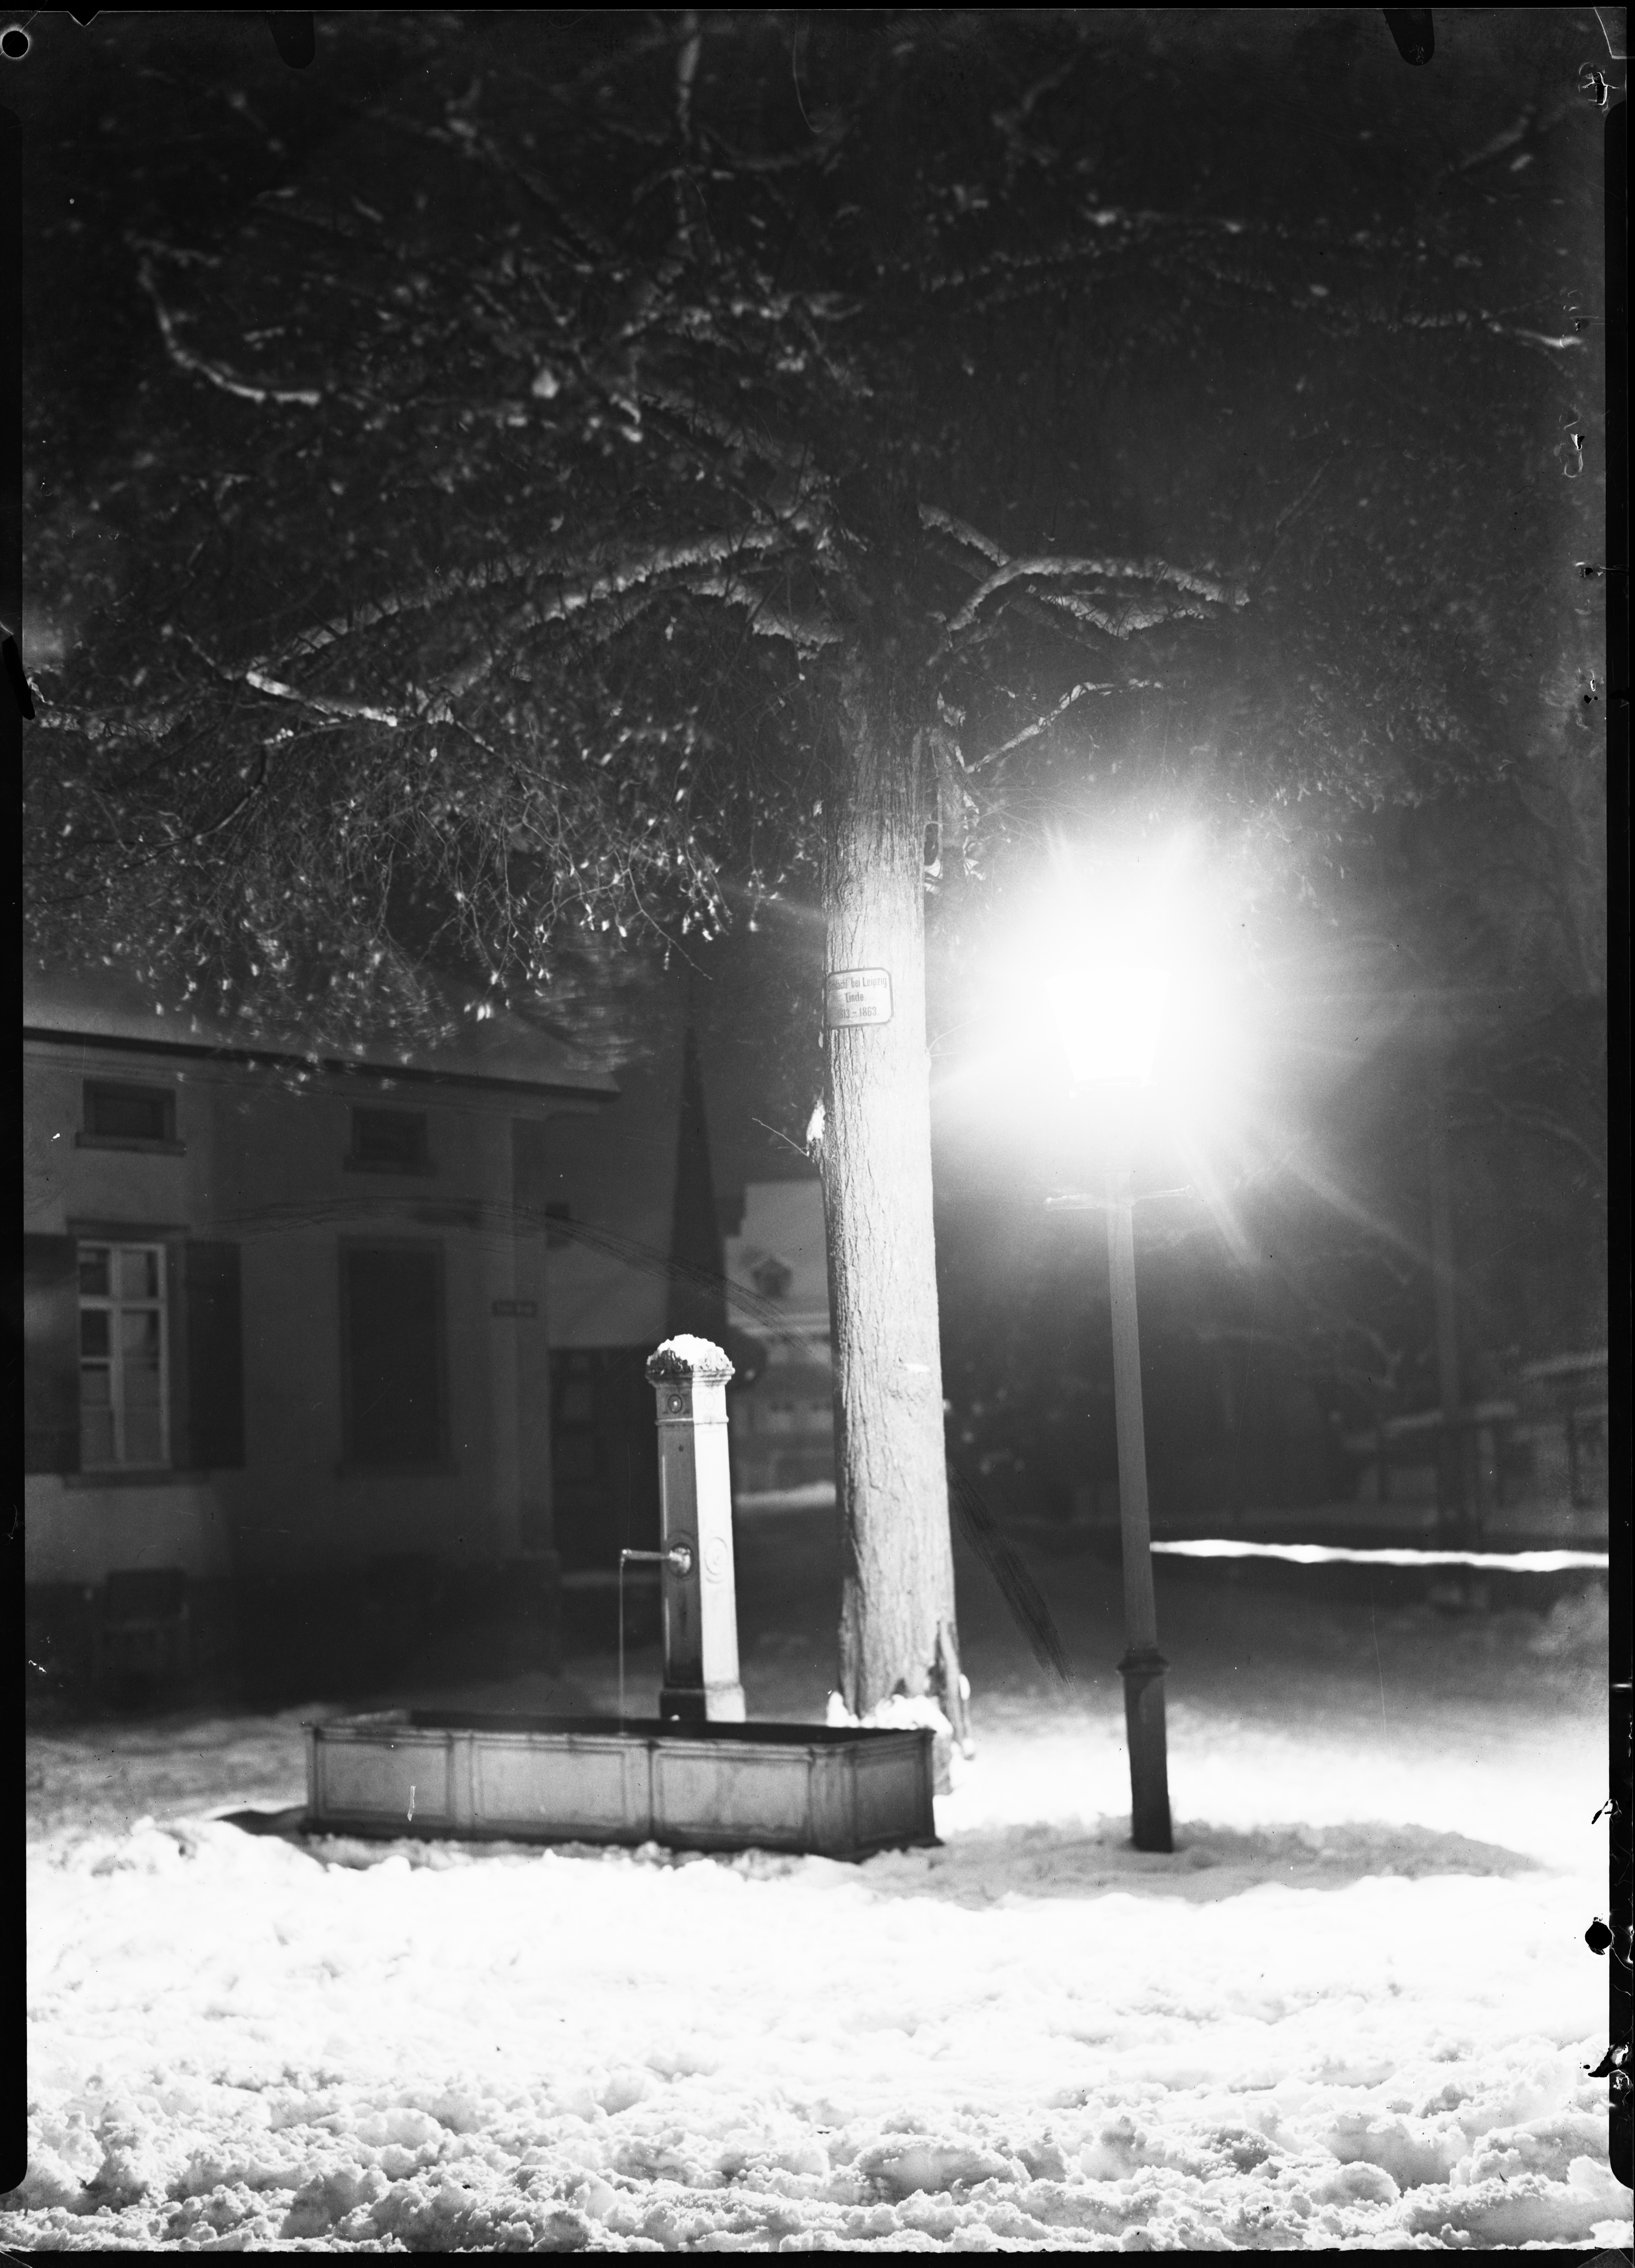  Gaslaterne bei Nacht, Stadtarchiv Stockach, Bildarchiv Foto Hotz 